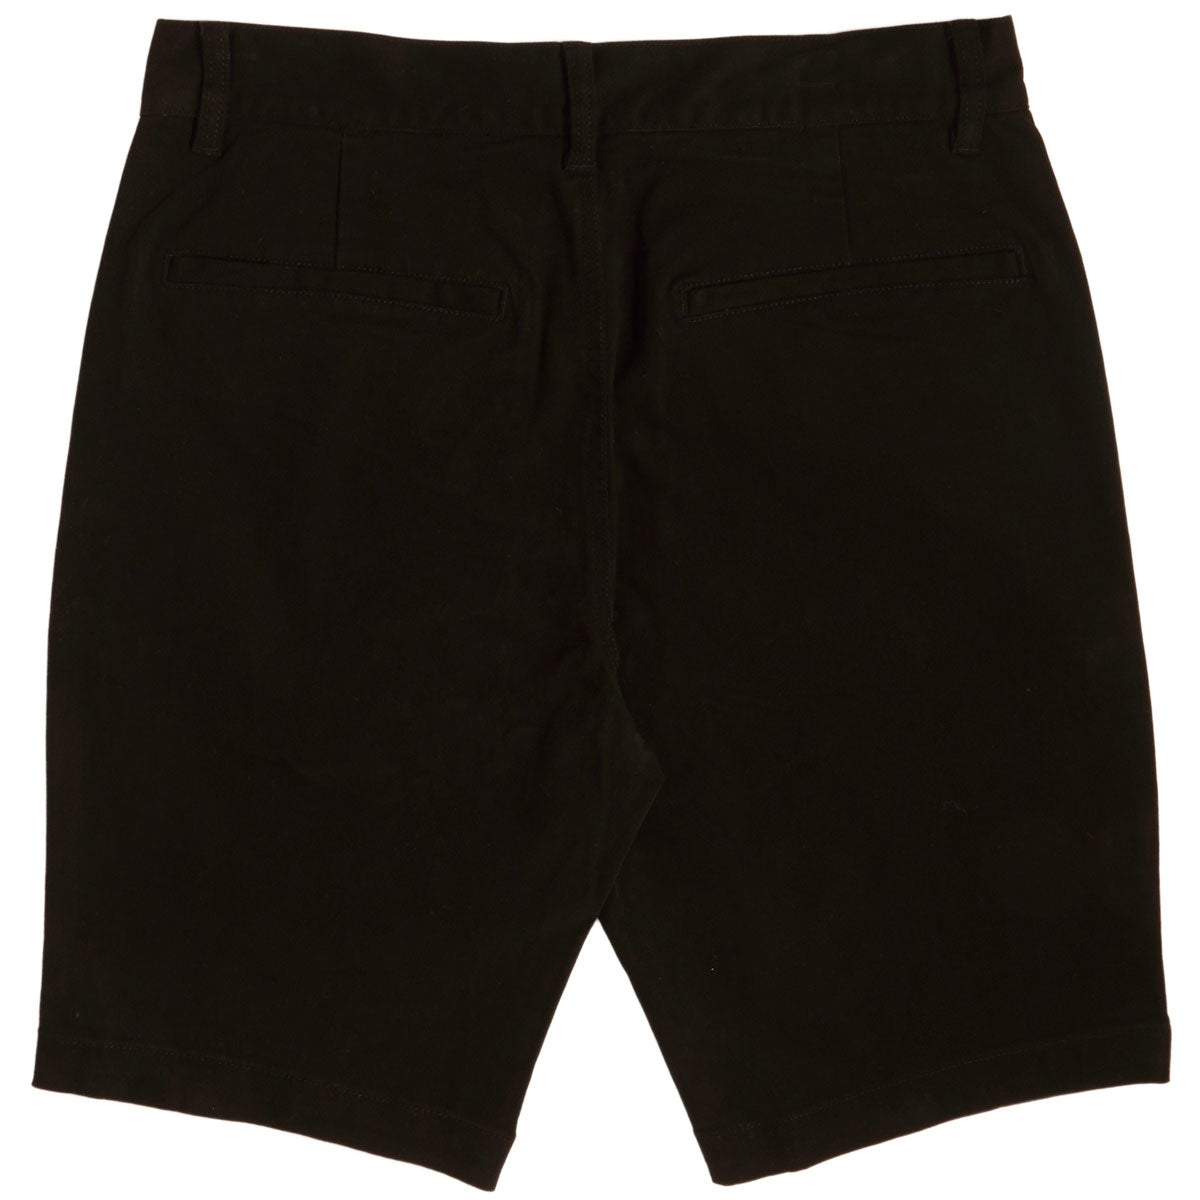 CCS Standard Plus Chino Shorts - Black image 6